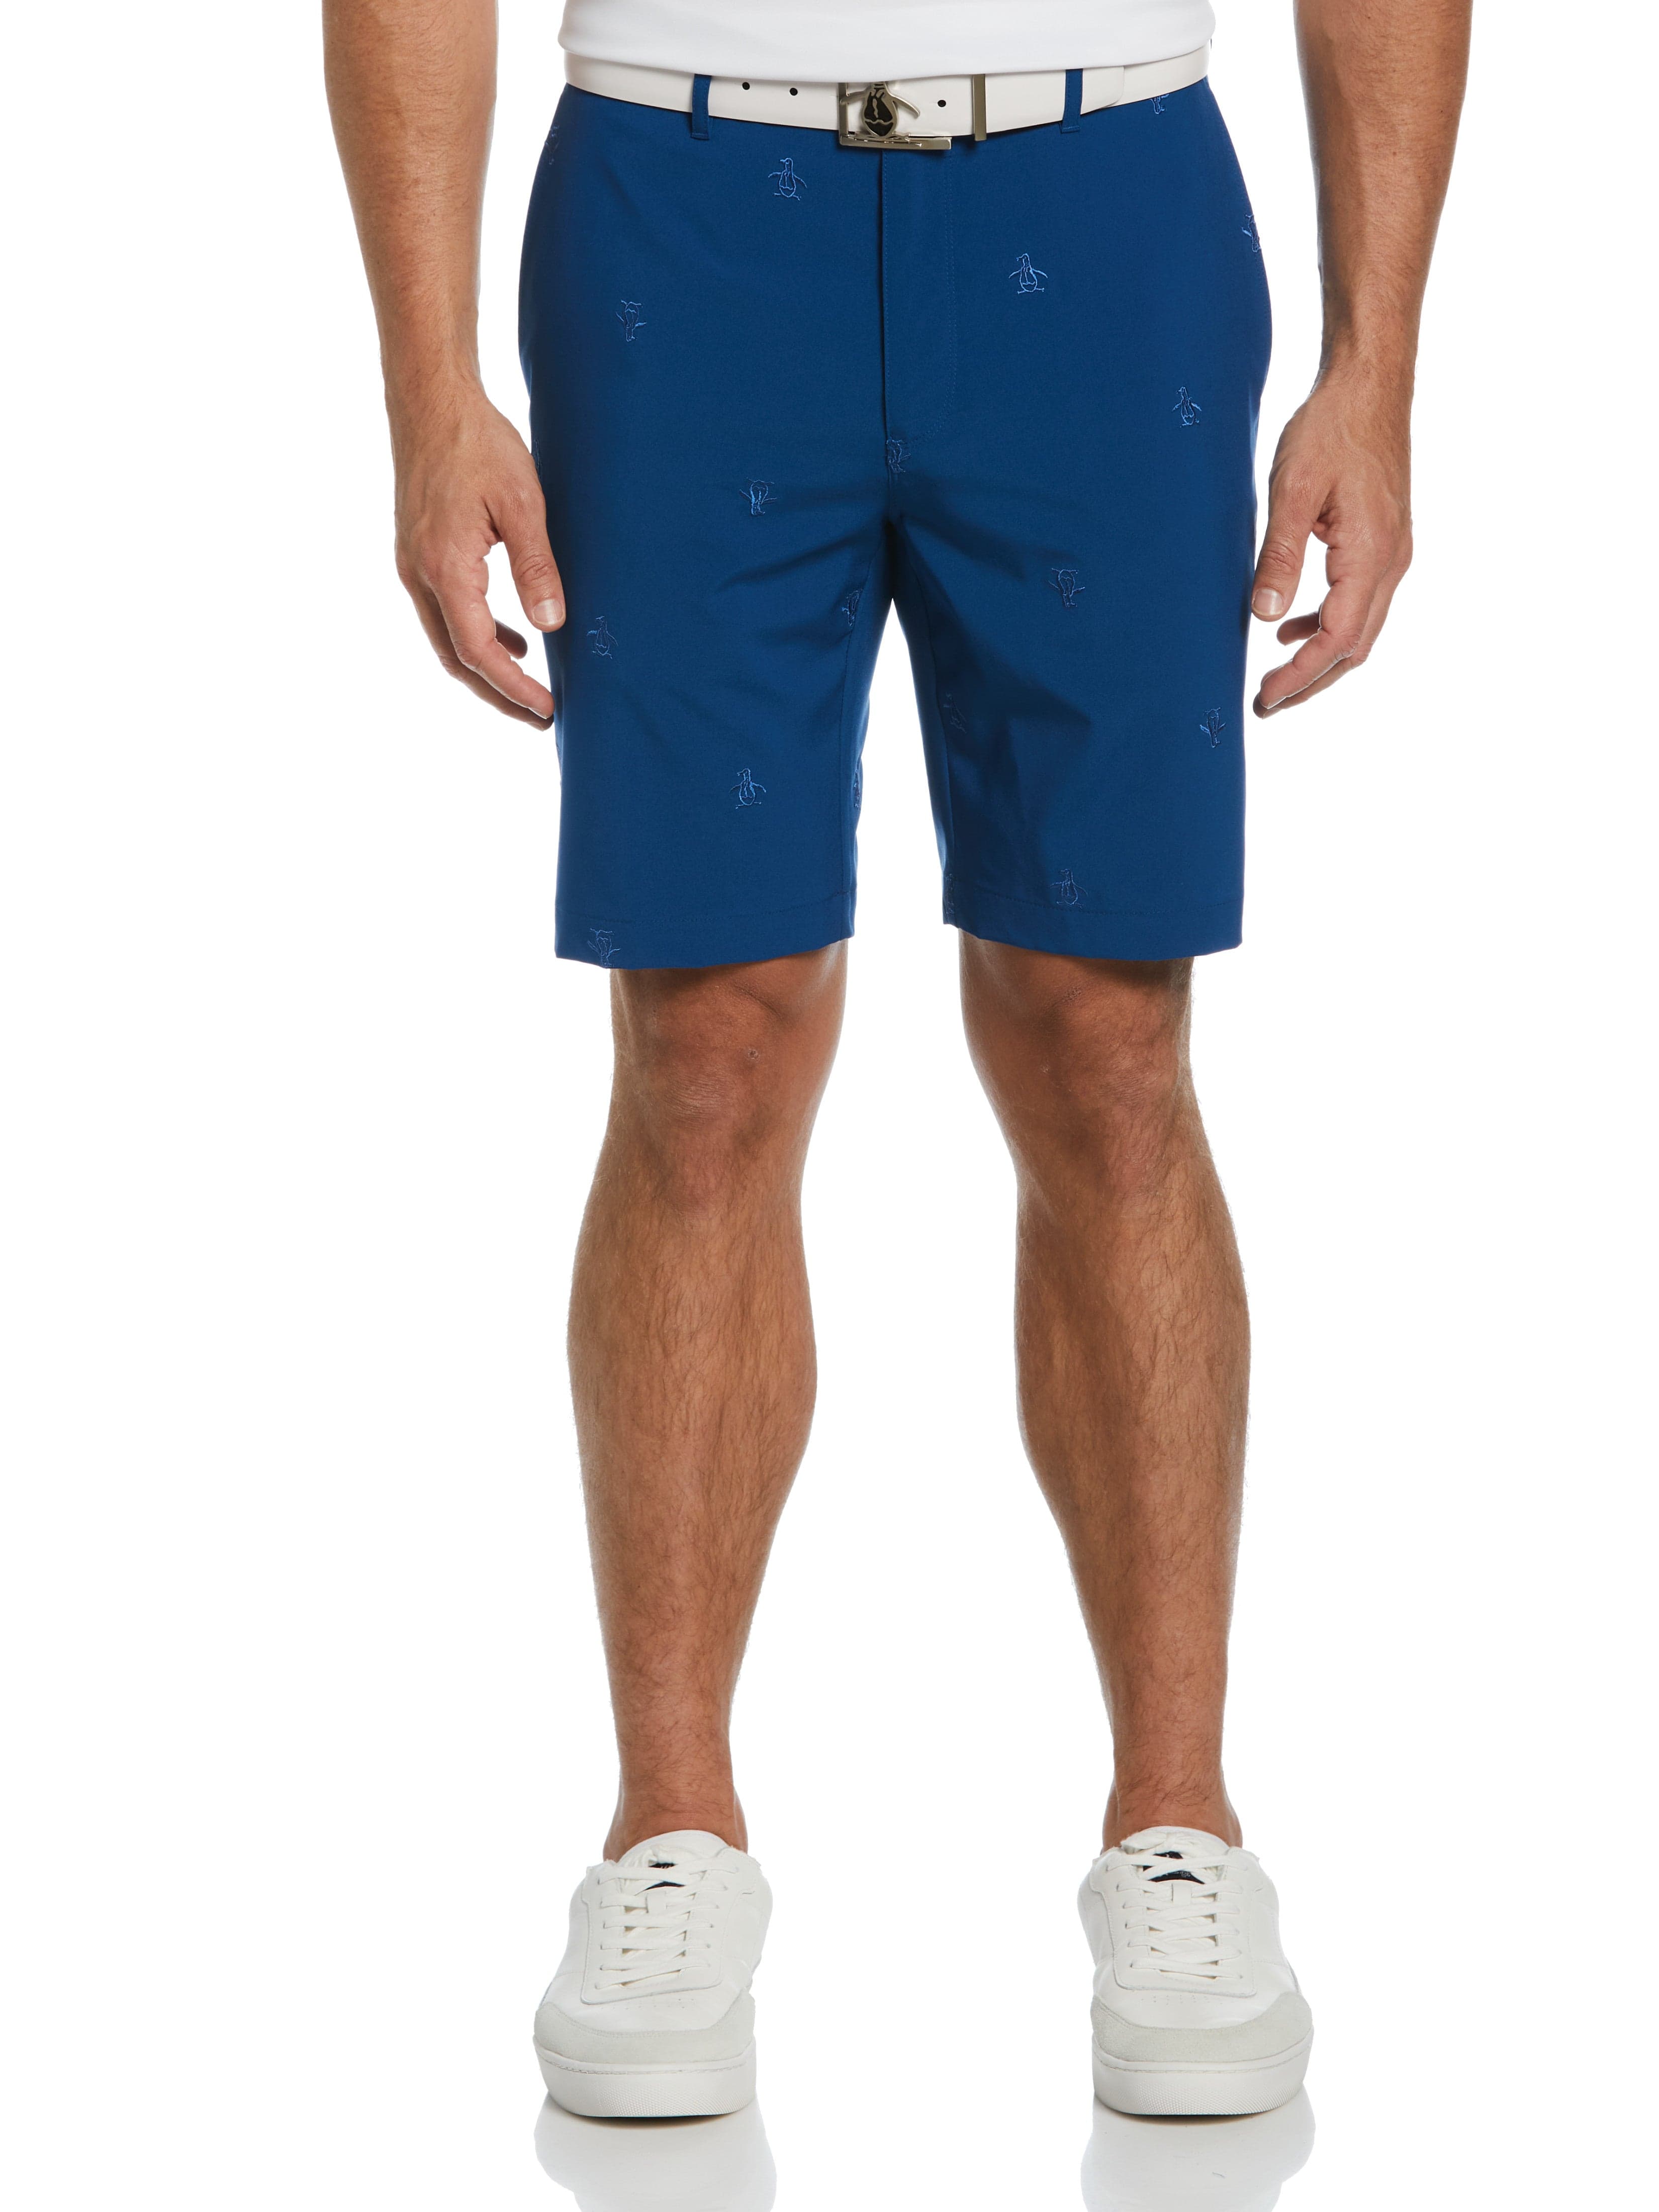 Original Penguin Mens Allover Pete Embroidered Golf Shorts, Size 32, Blueberry Pancake, Polyester/Spandex | Golf Apparel Shop